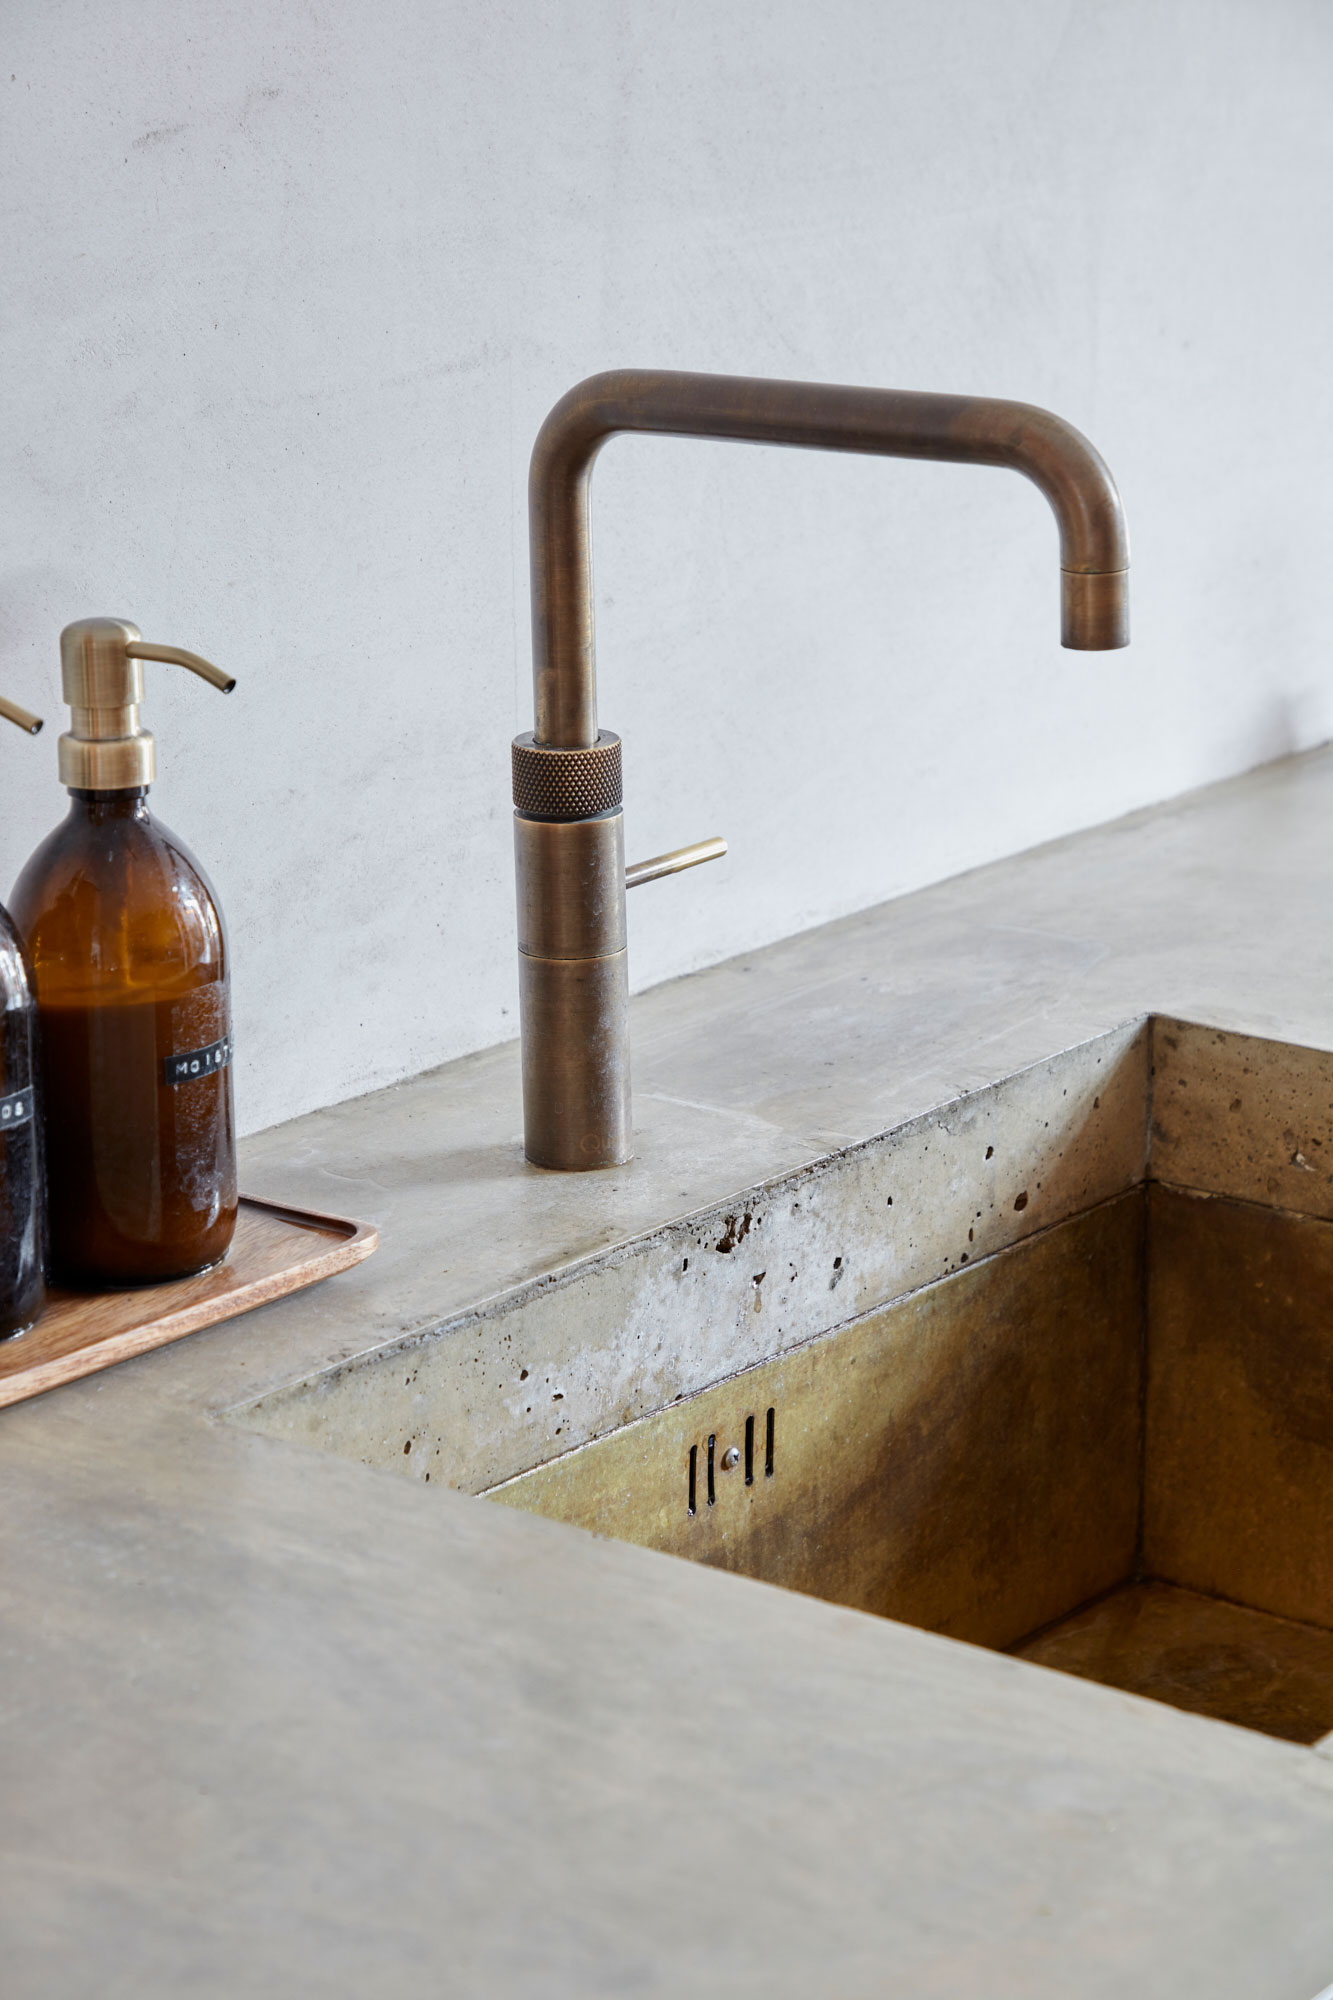 Aged brass tap and kitchen sink